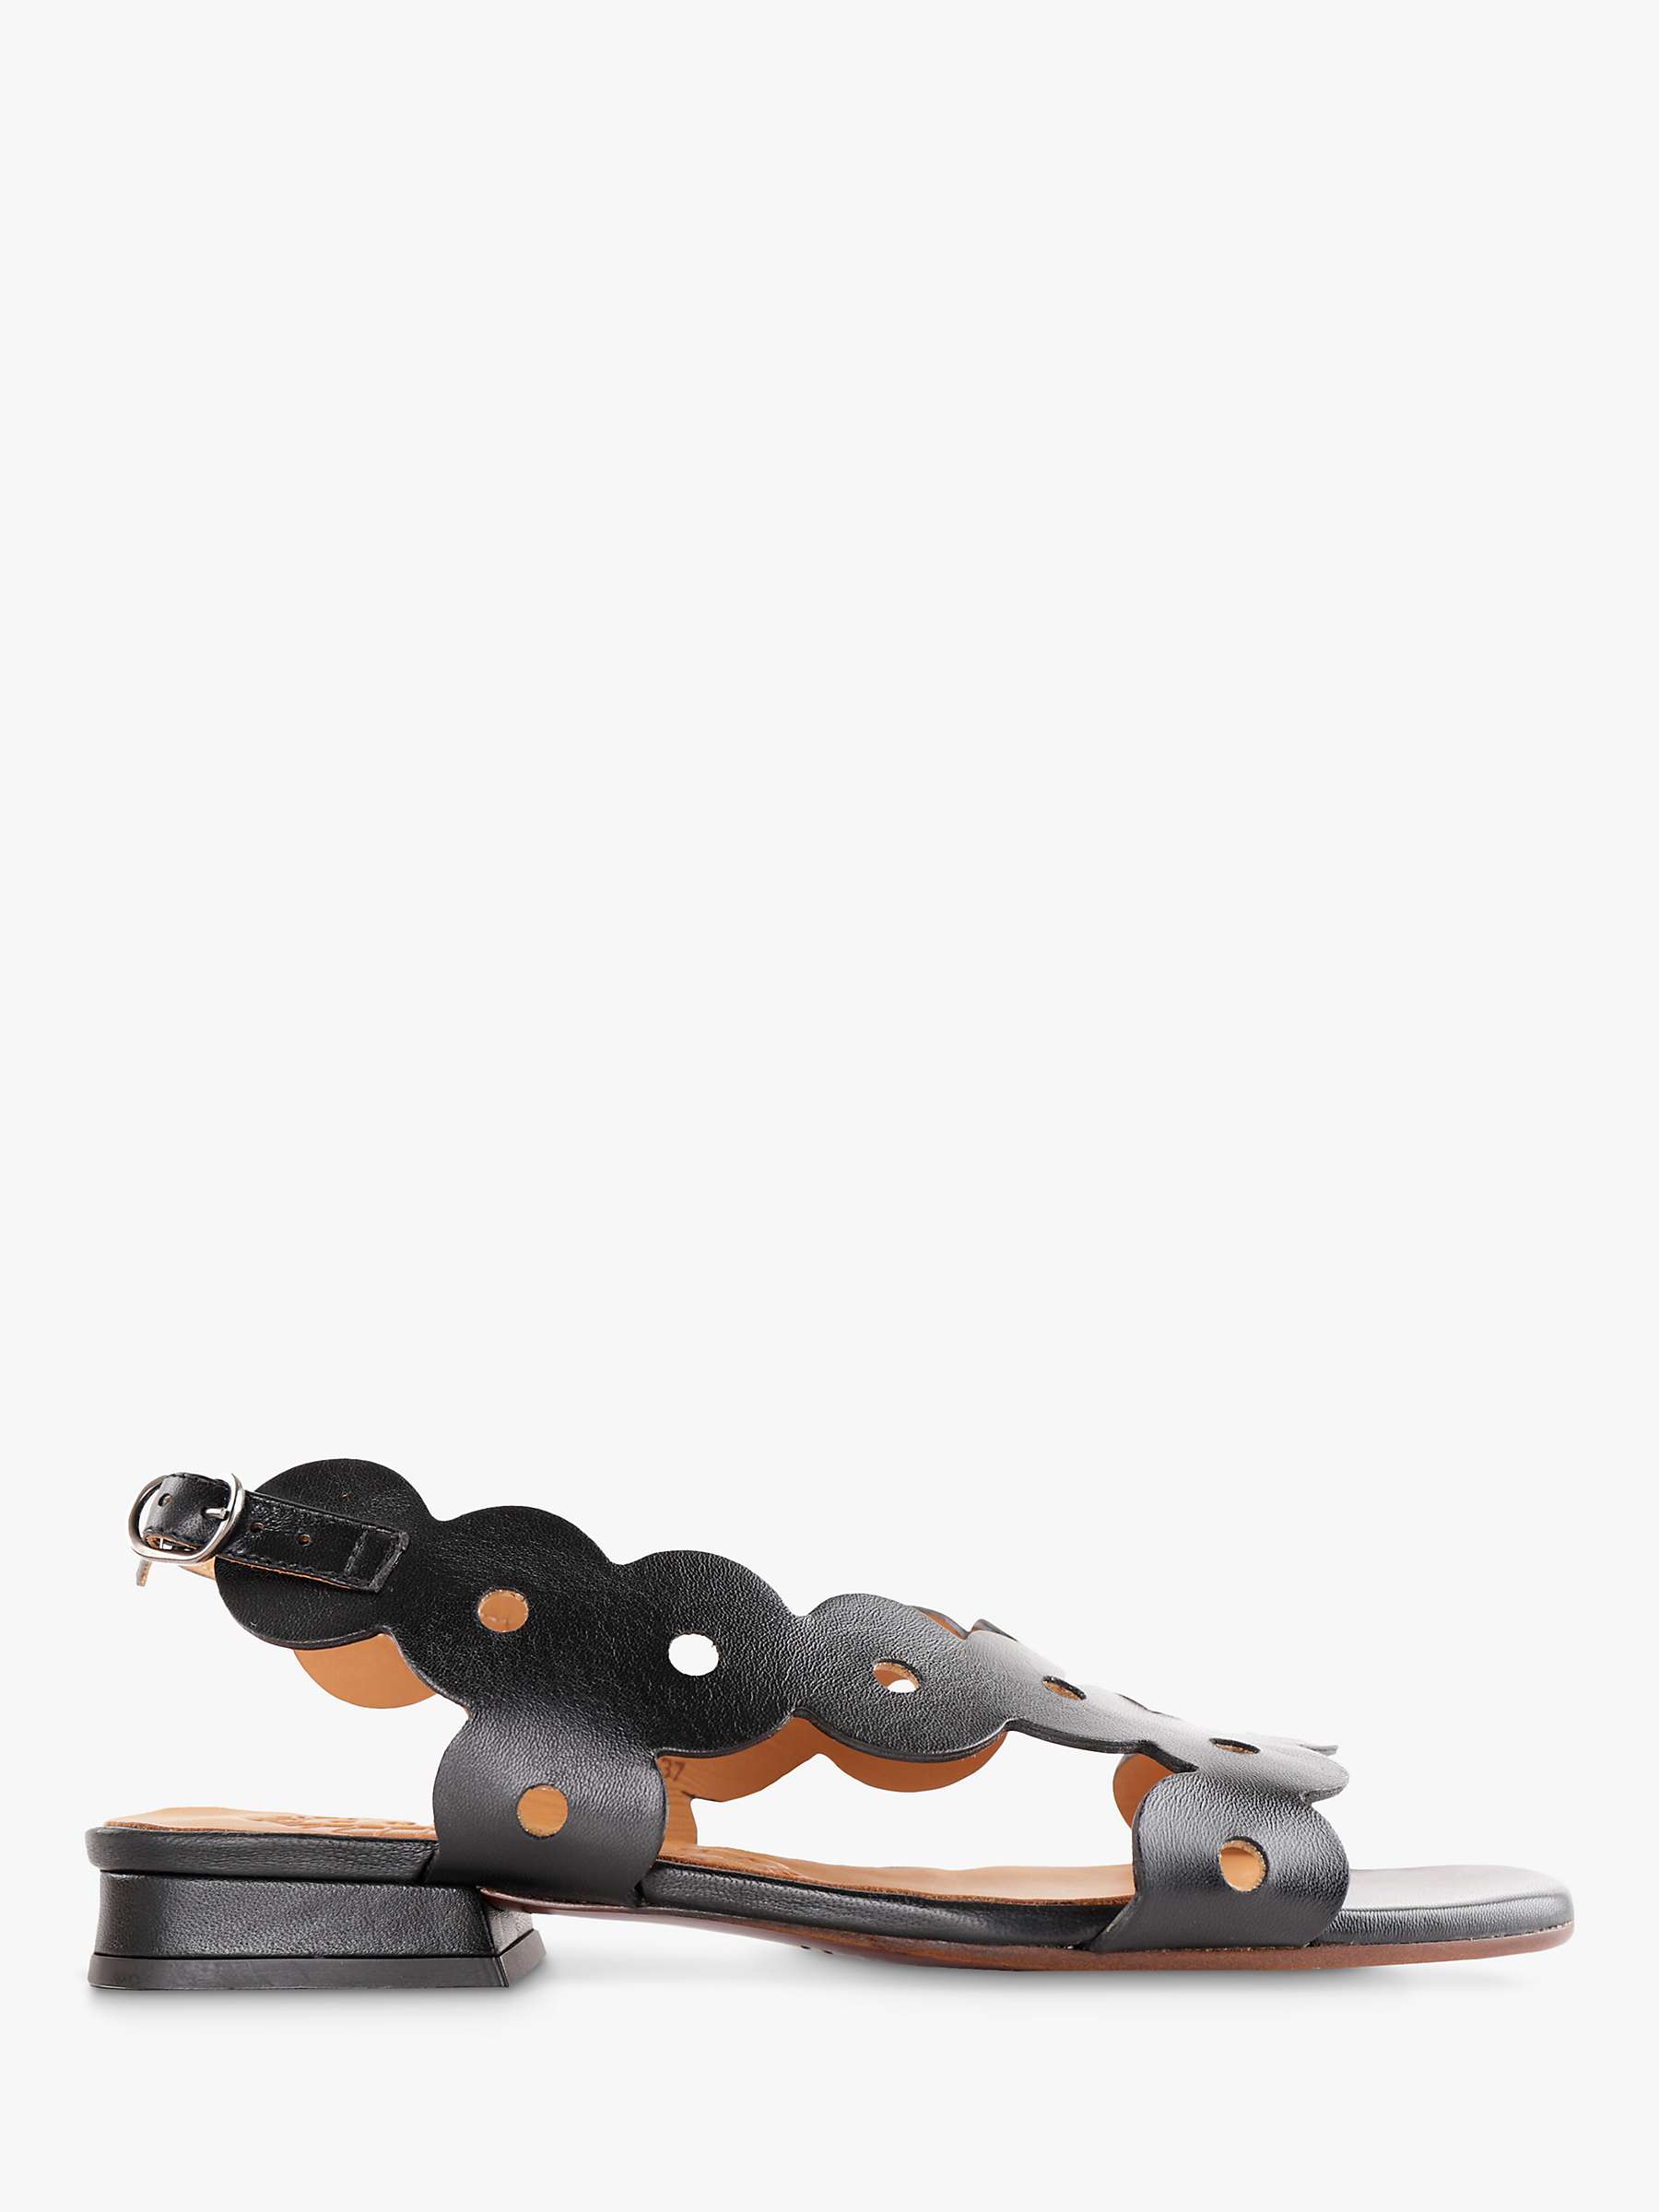 Buy Chie Mihara Teide Leather Sandals, Black Online at johnlewis.com